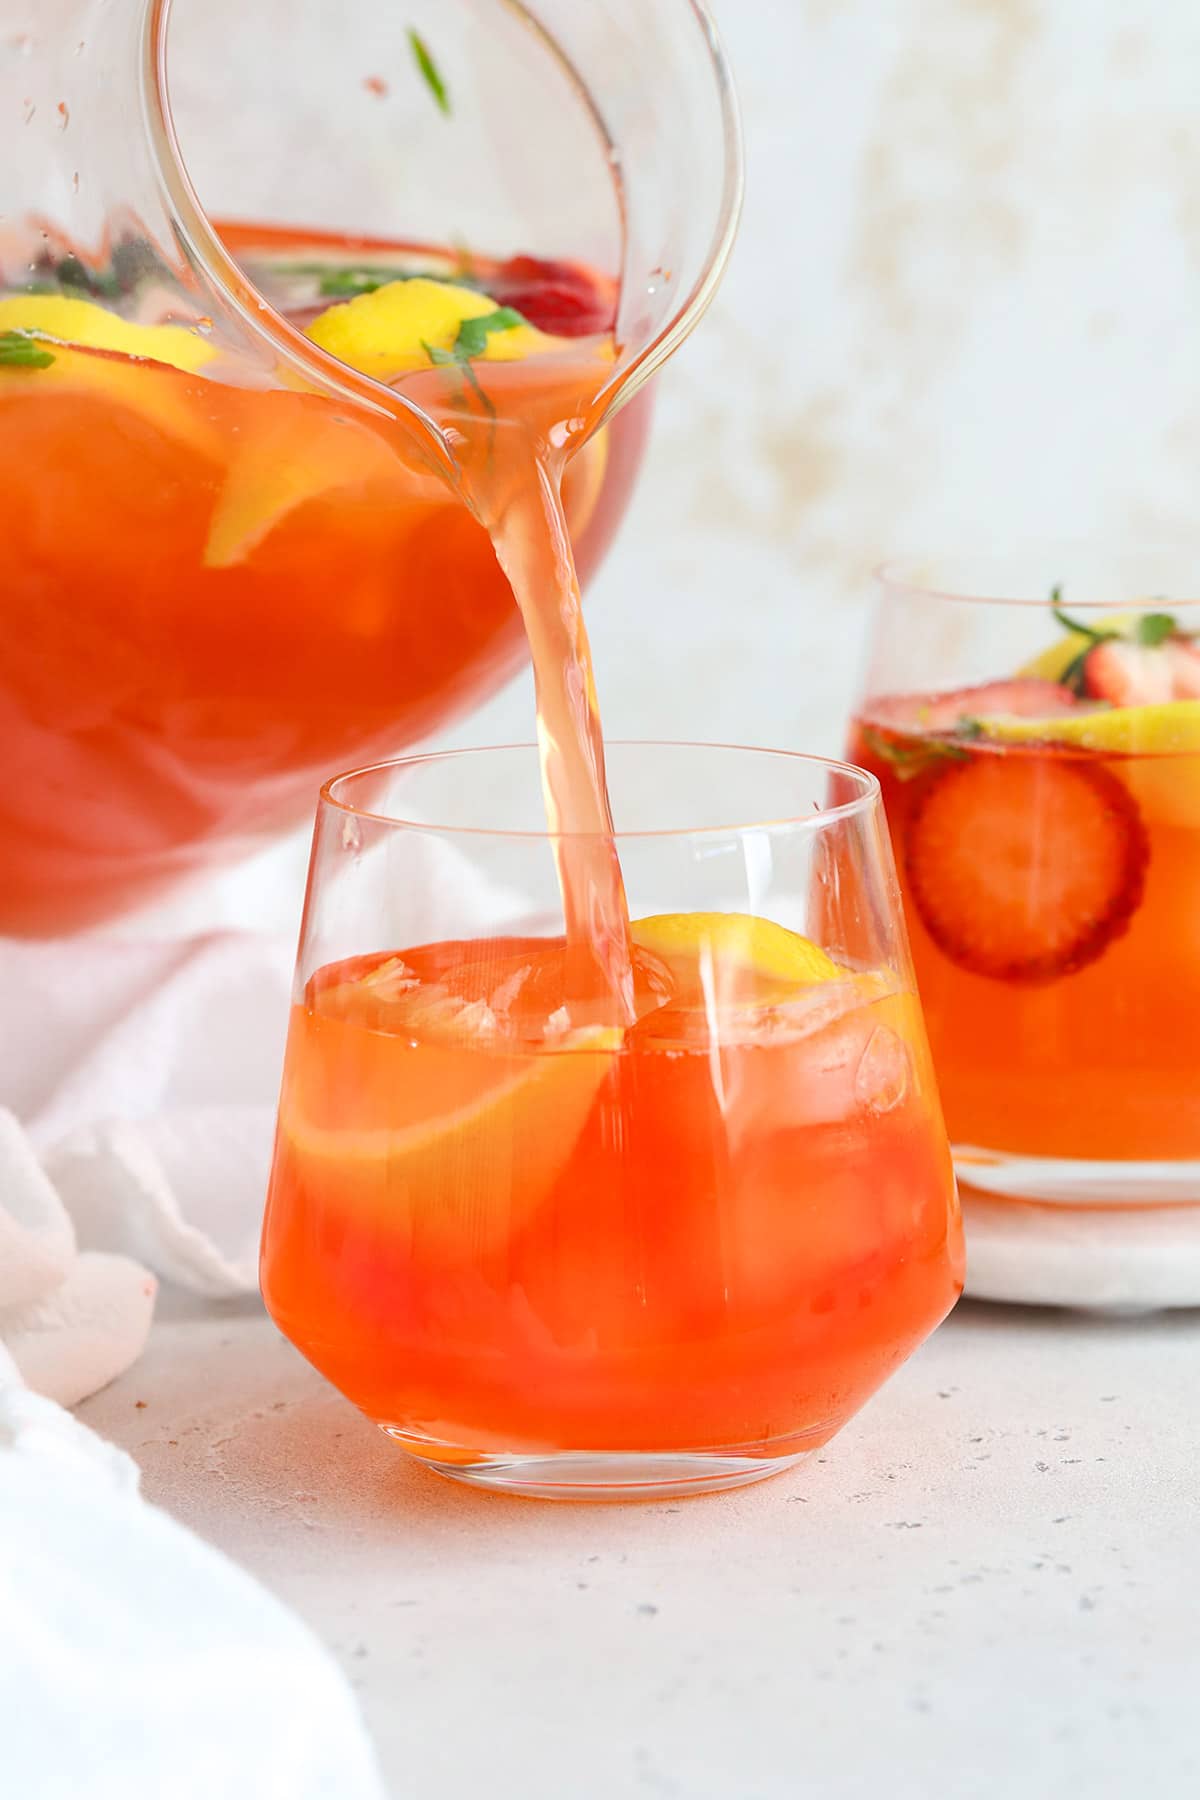 Pouring a glass of strawberry basil lemonade